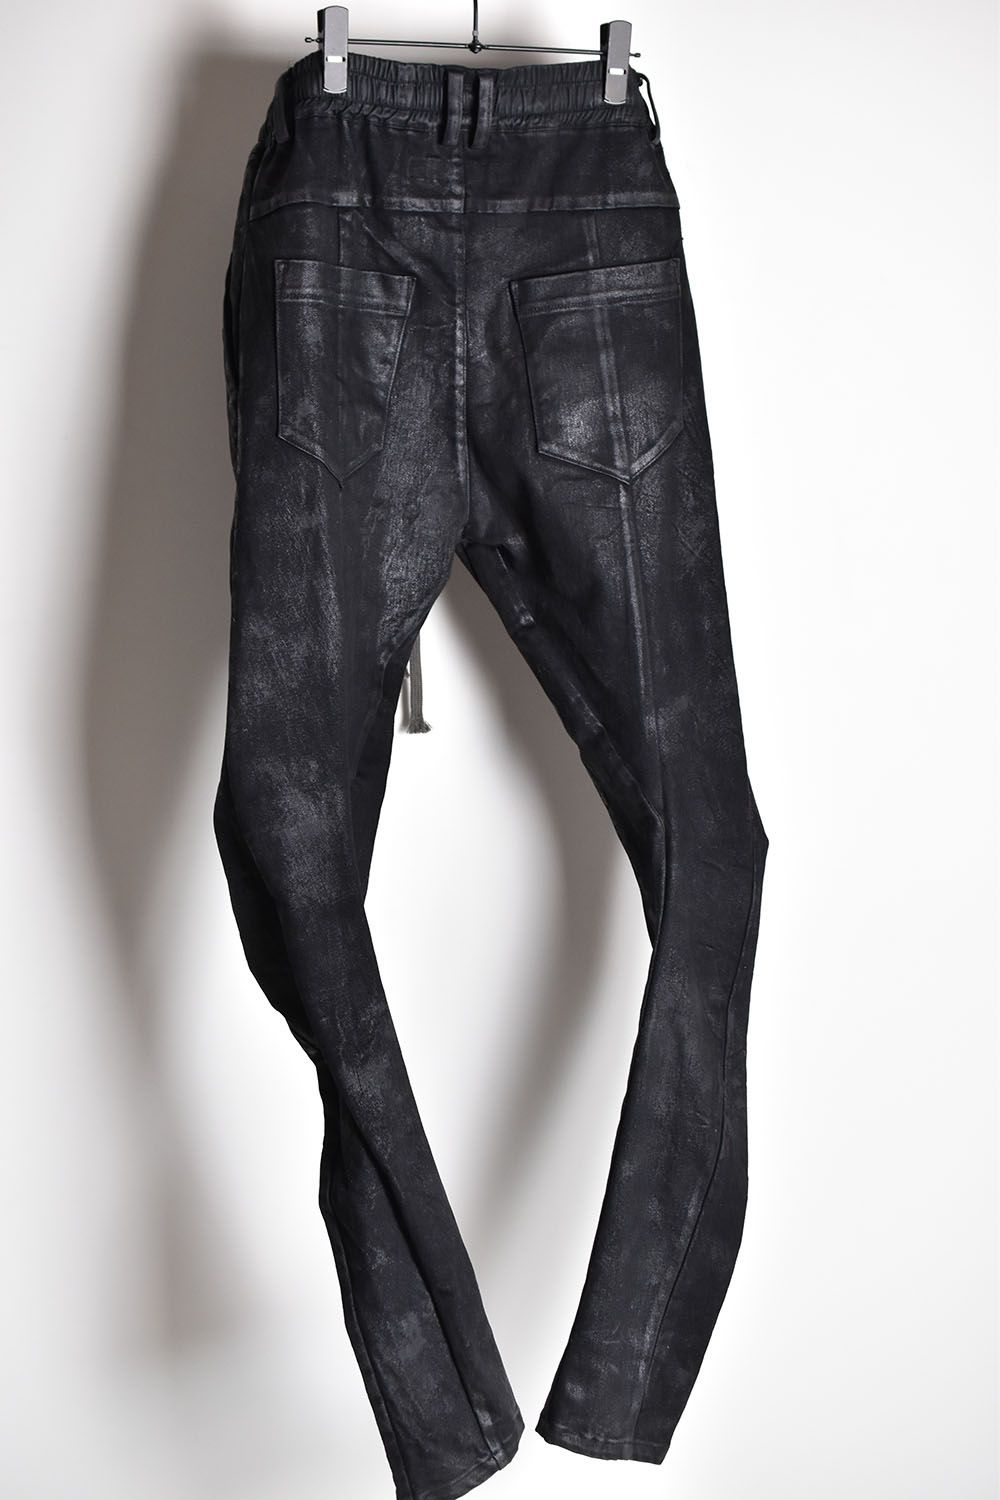 Couted Anatomical Long Pants"Black"/コーテッドアナトミカルフィットロングパンツ"ブラック"